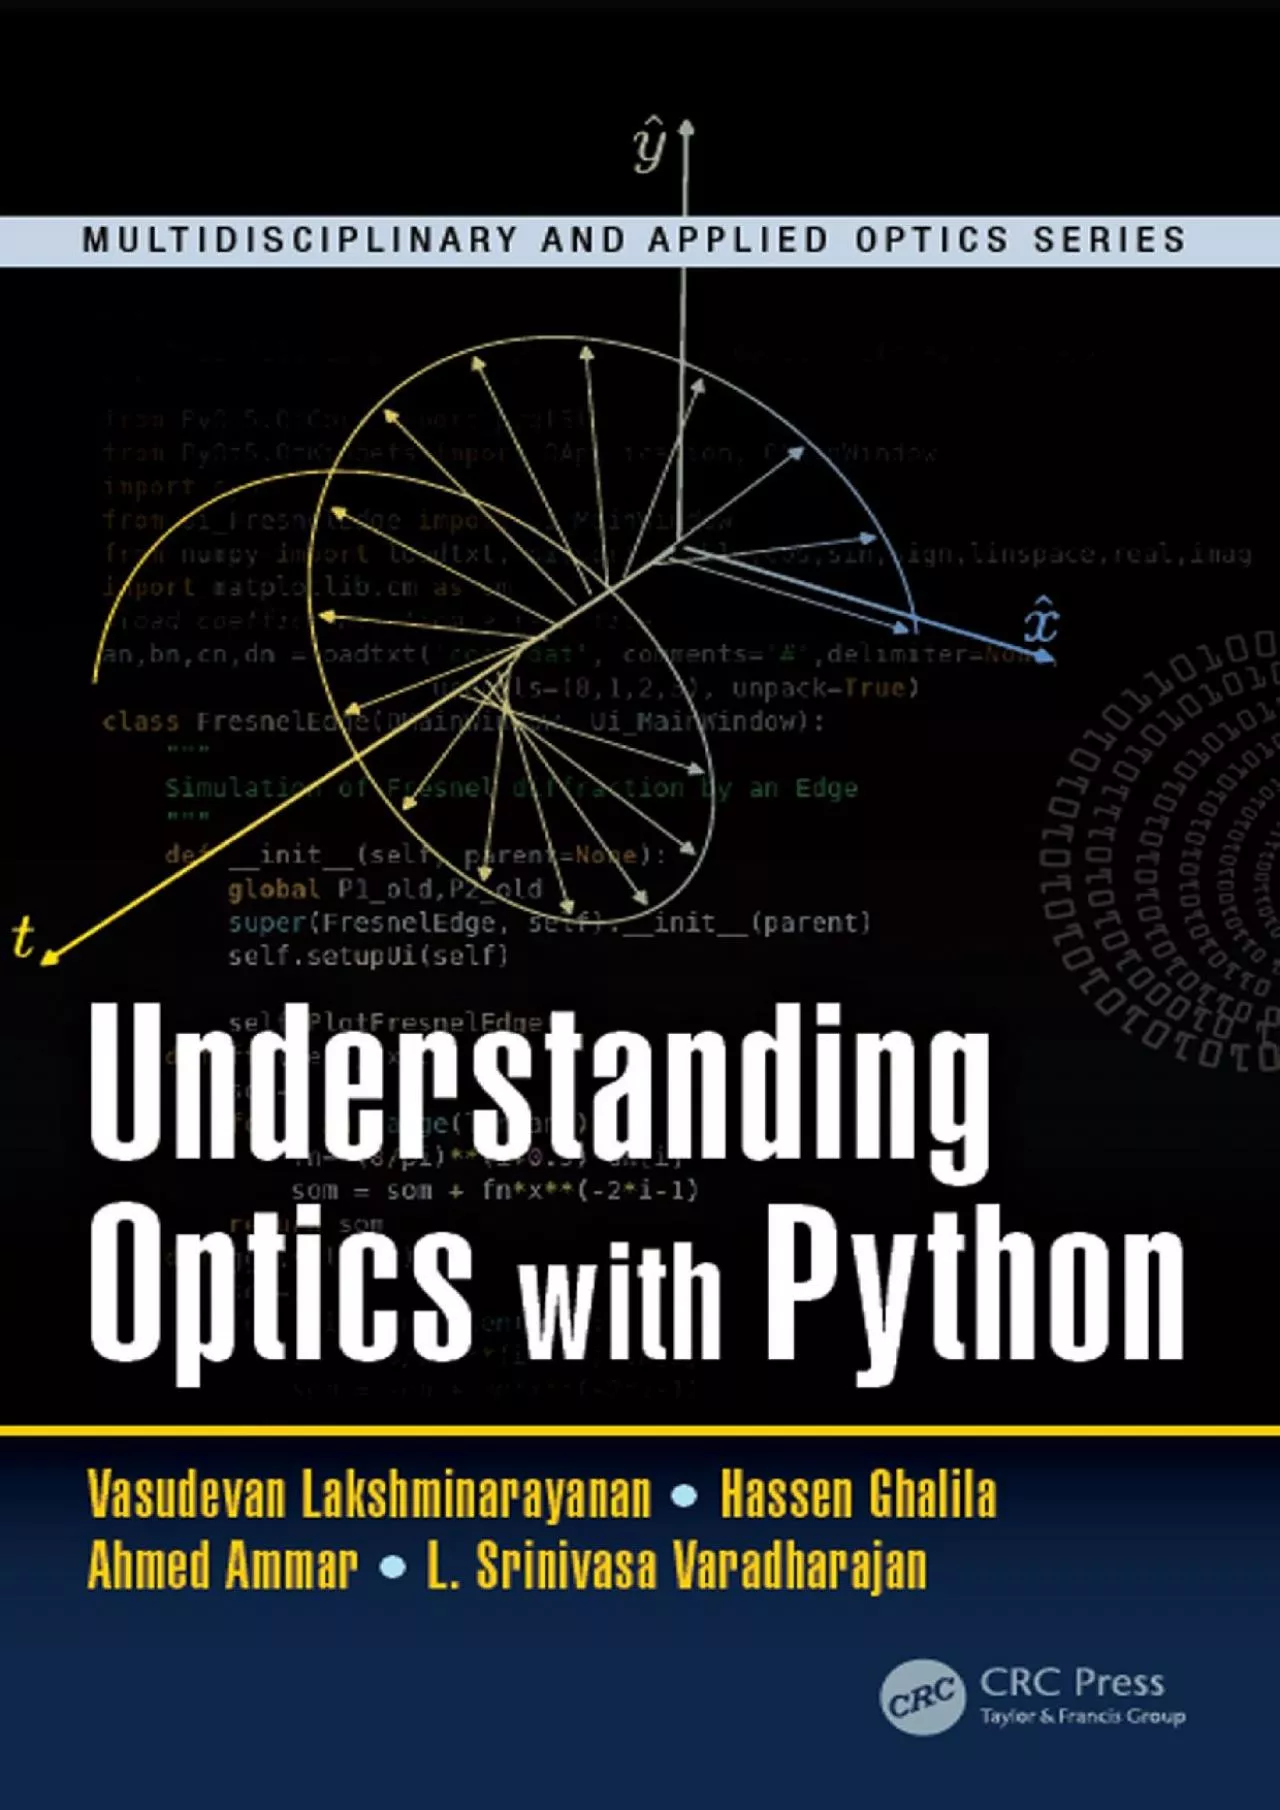 [READING BOOK]-Understanding Optics with Python (Multidisciplinary and Applied Optics)